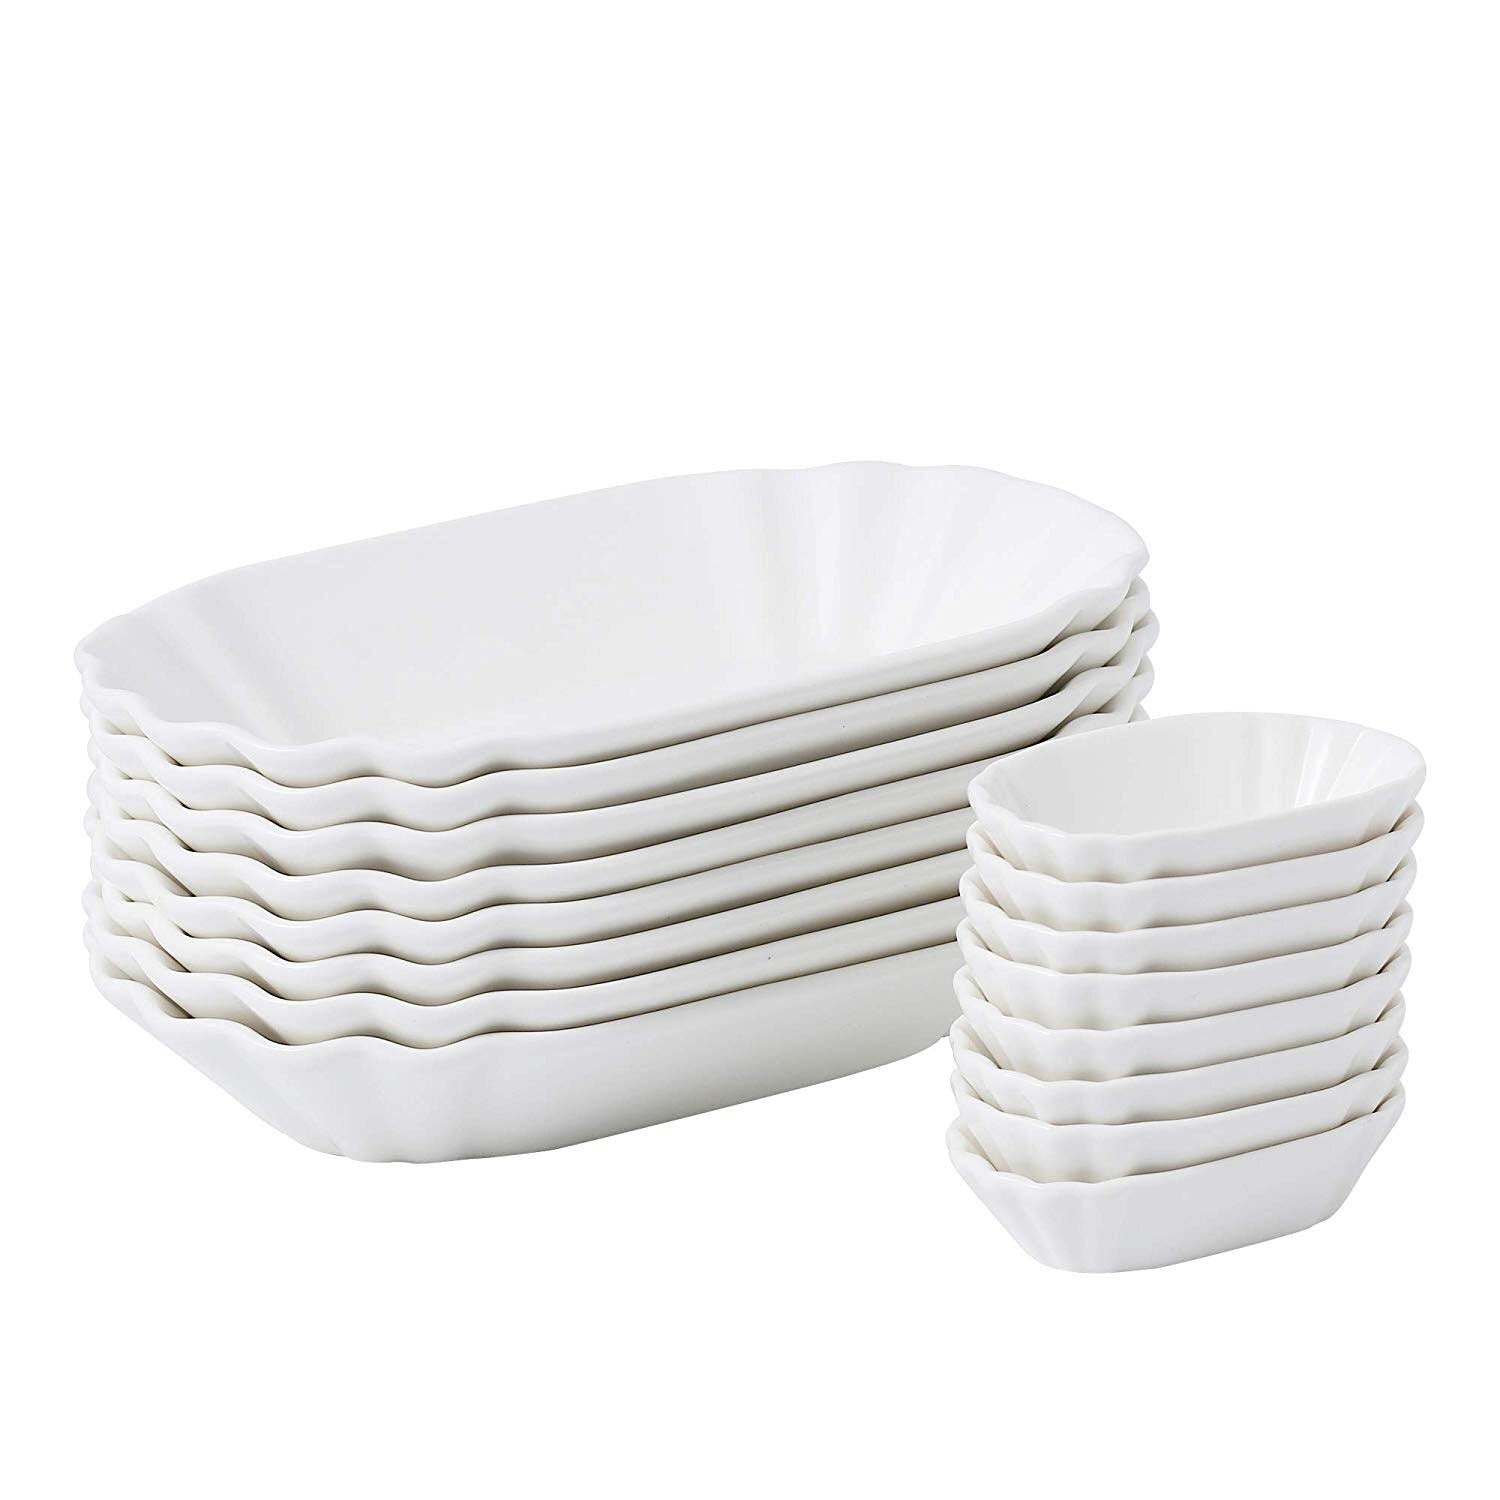 16-Piece Ceramic Snack/Dessert Plates and Dishes Set (8 x 7.75" and 8 x 3") - Nordic Side - 16, 775, and, Ceramic, Dessert, Dishes, MALACASA, Piece, Plates, Porcelain, Regular, Sets, Snack, w